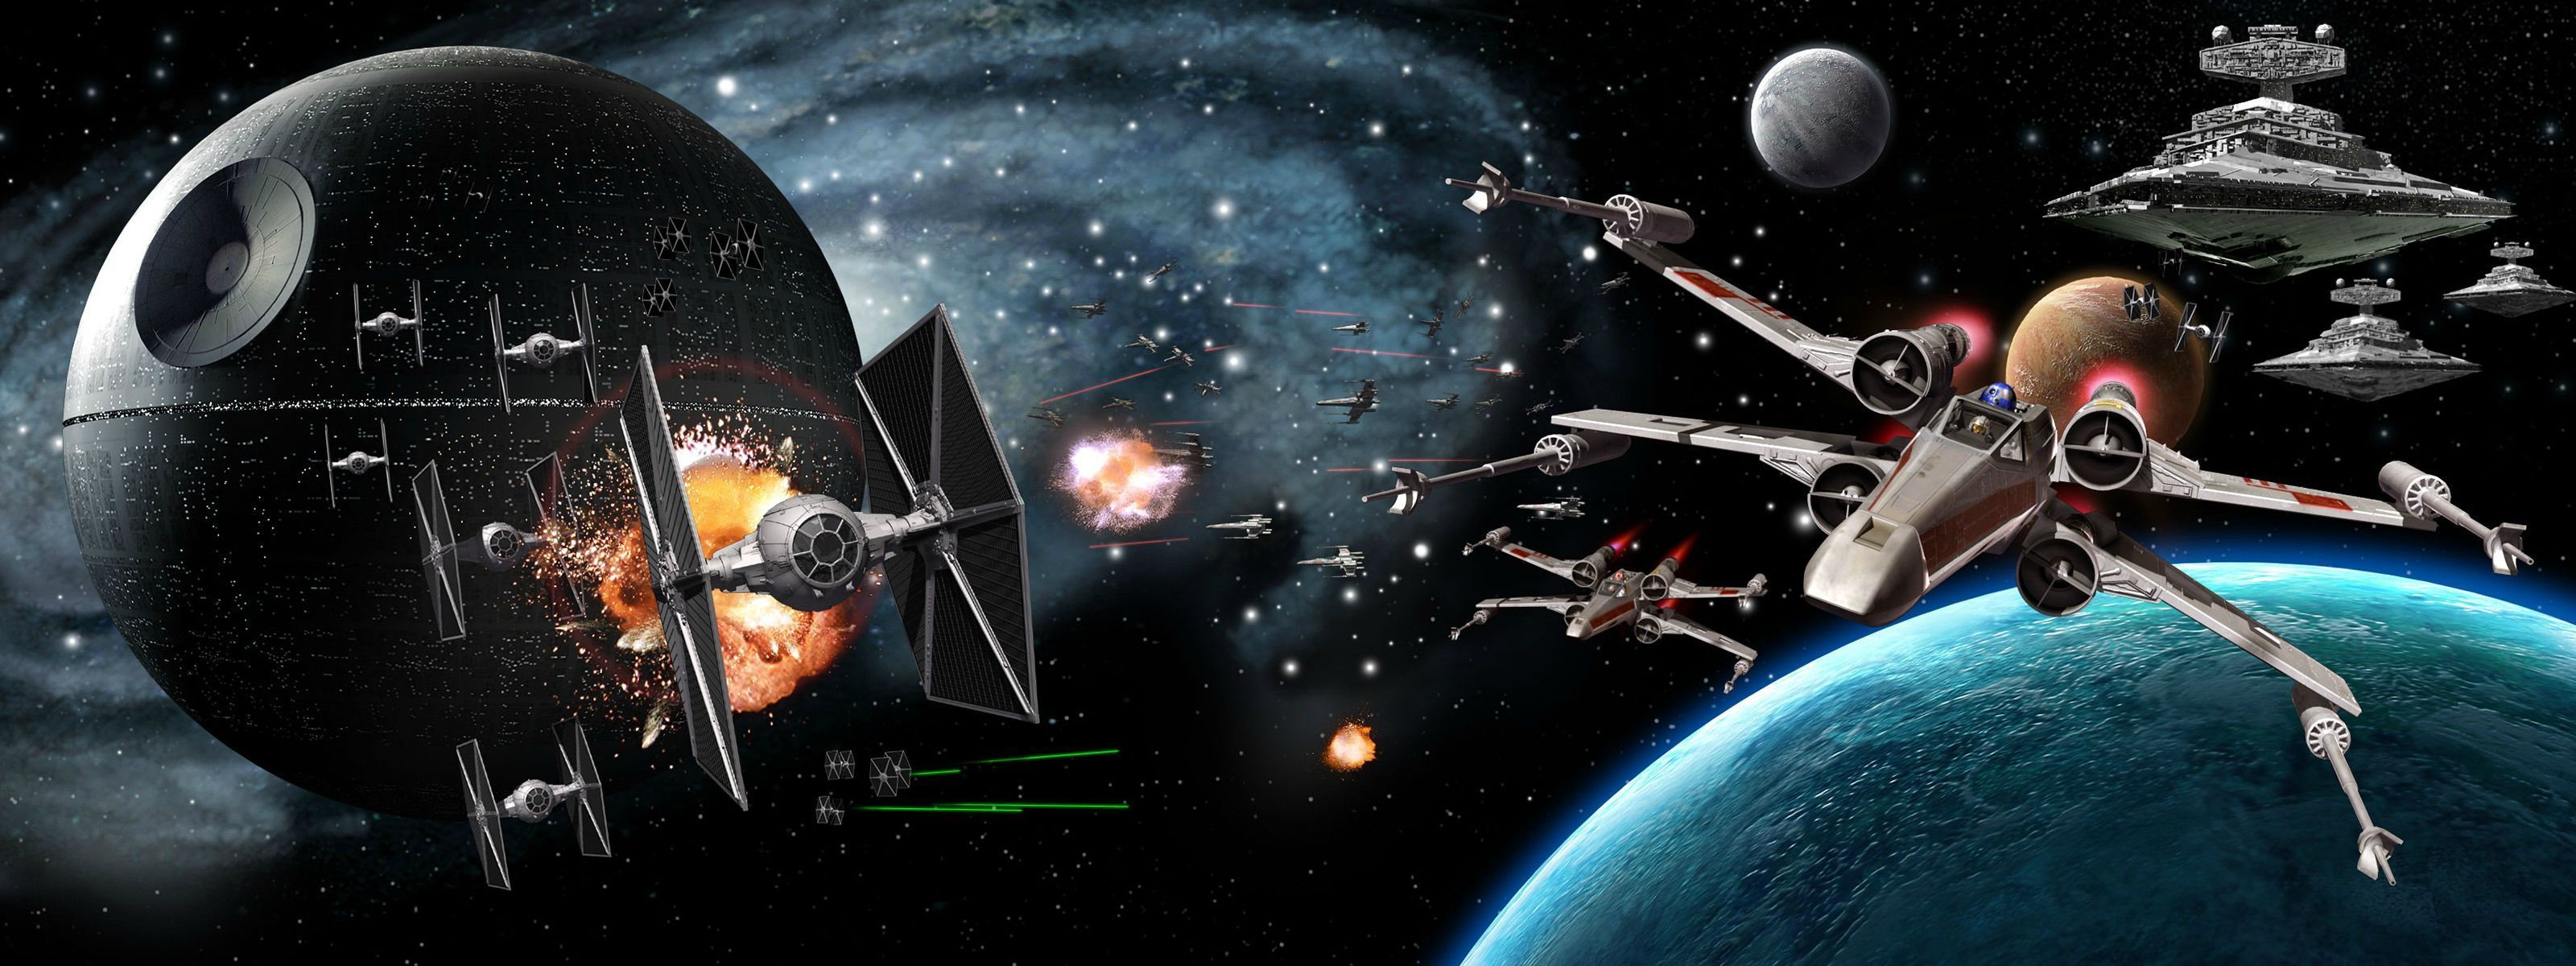 Dual screen background. Star wars wallpaper, Star wars background, Star wars awesome